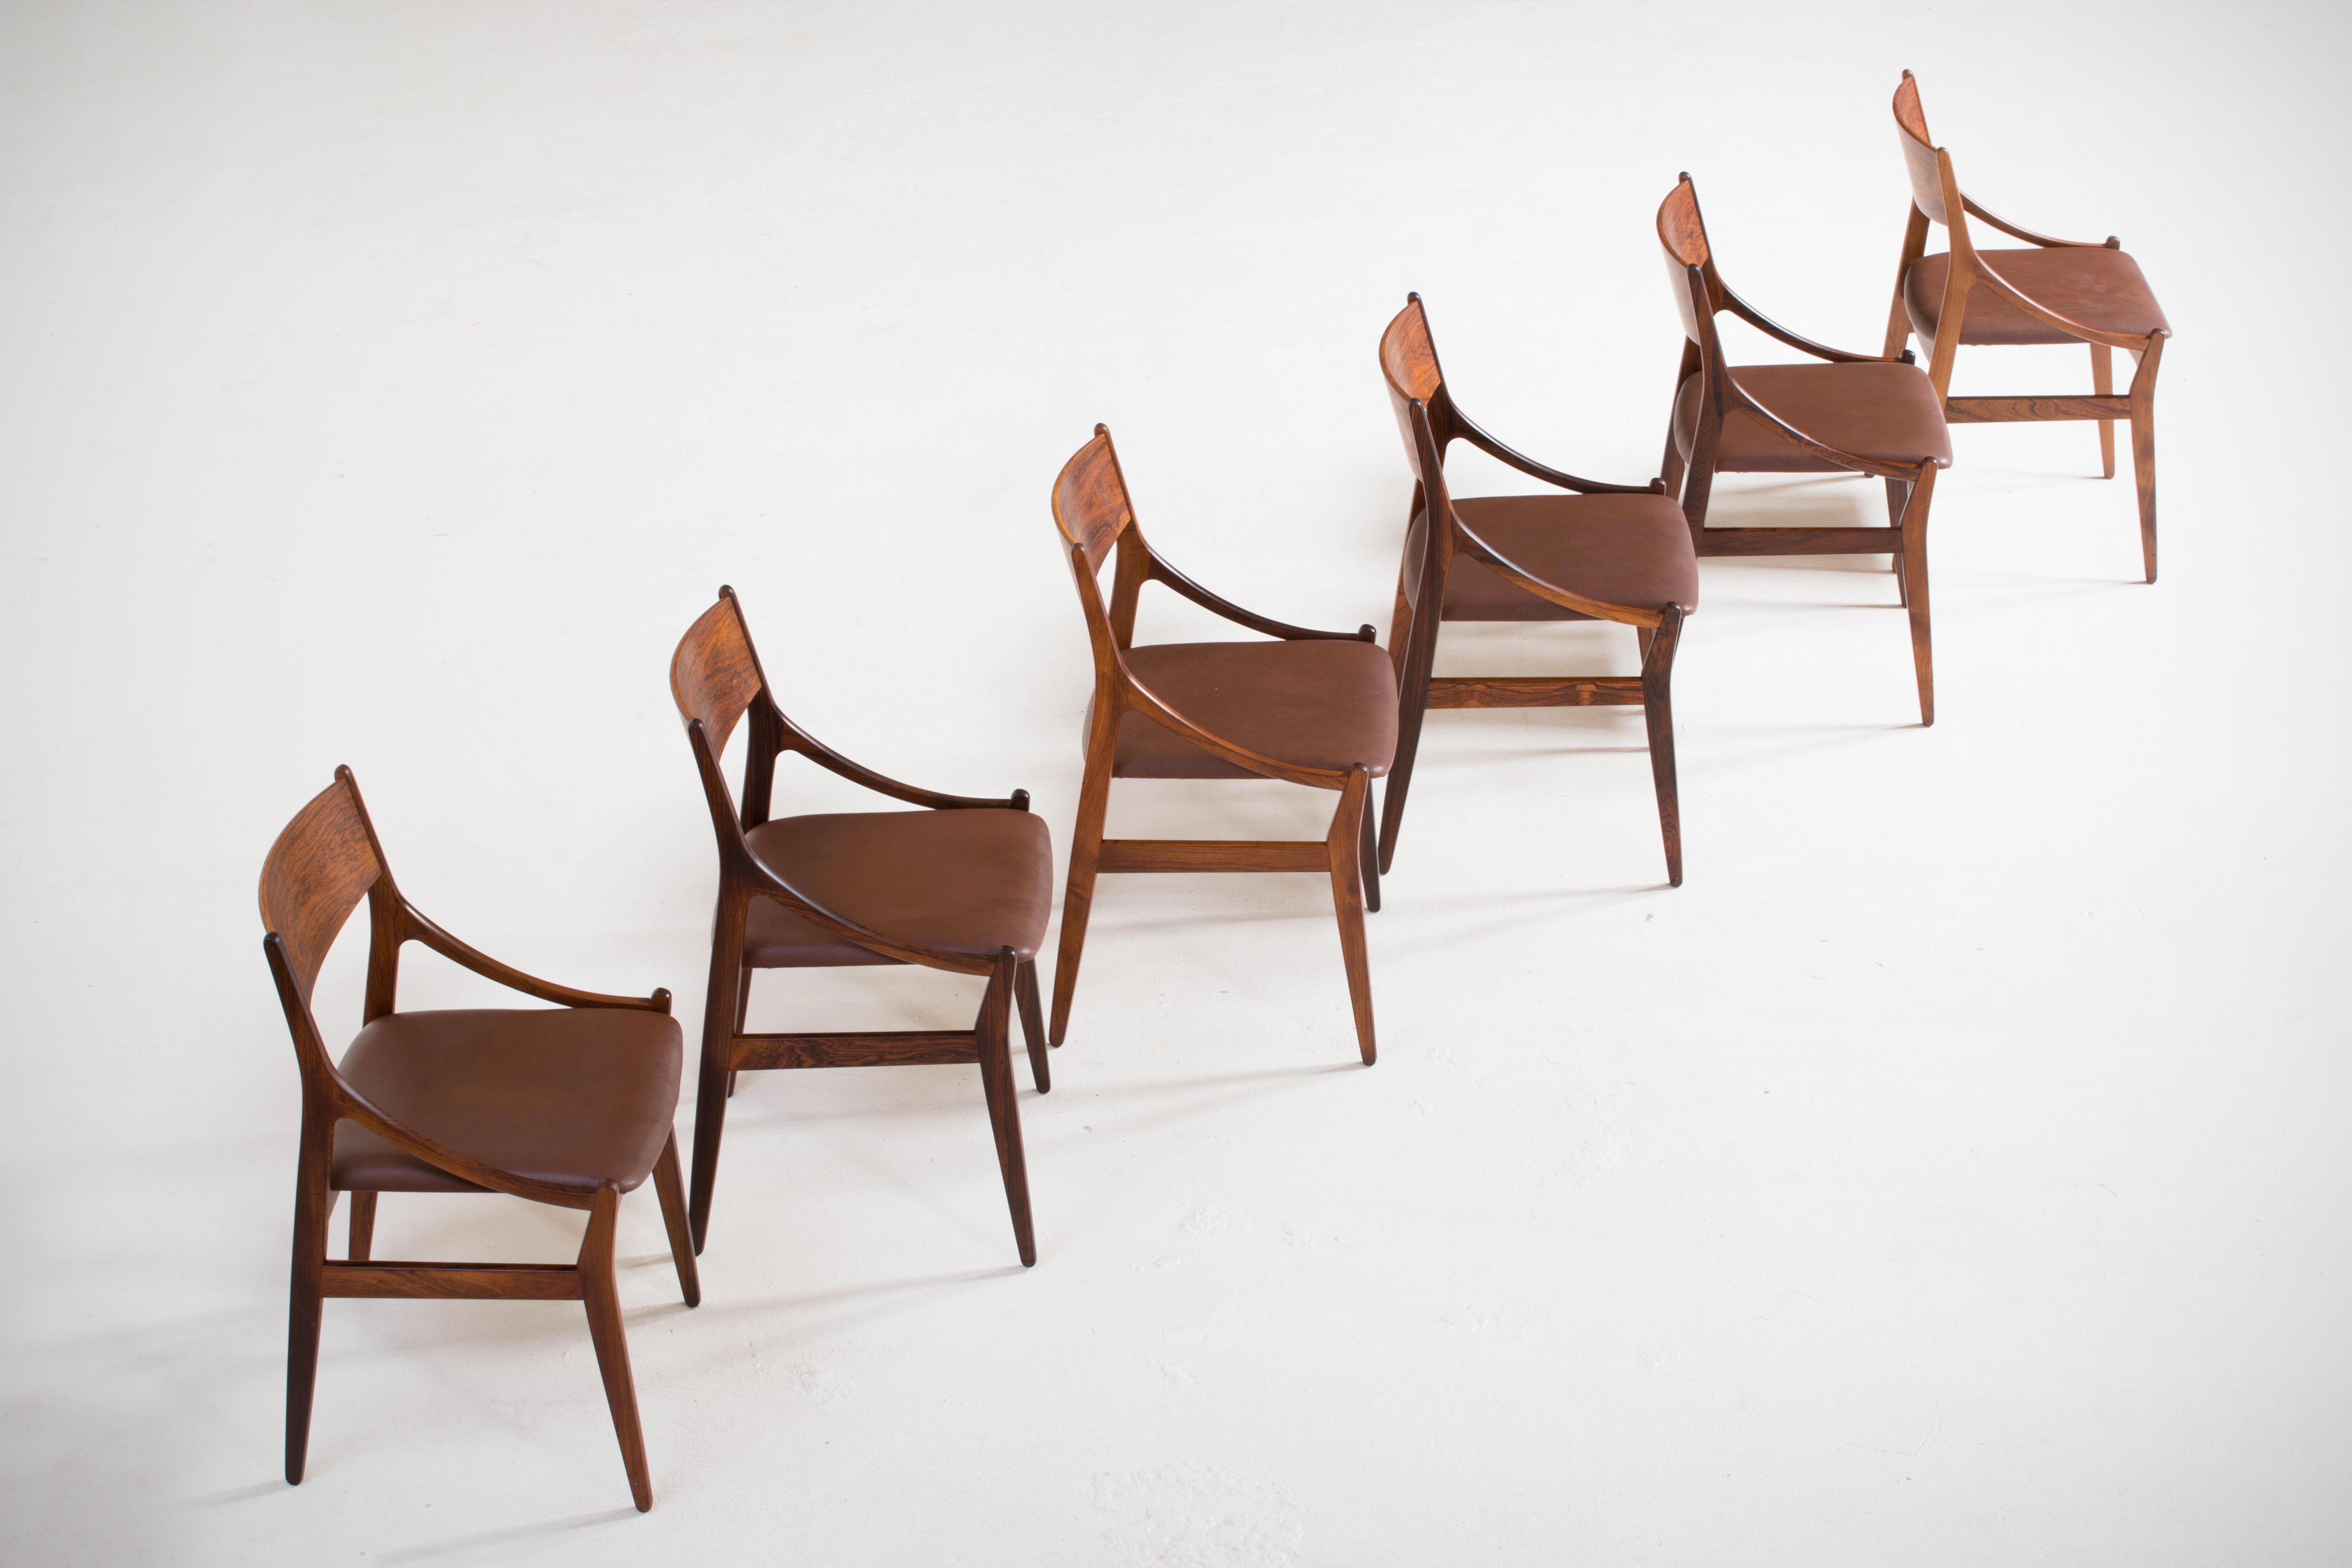 Vestervig Eriksen set of six dining chairs in partly solid rosewood.

Seats new upholstered with tan vintage aniline leather.

Made by Brdr. Tromborg’s Eftf., Møbelfabrik Vestervig Eriksen Aarhus.